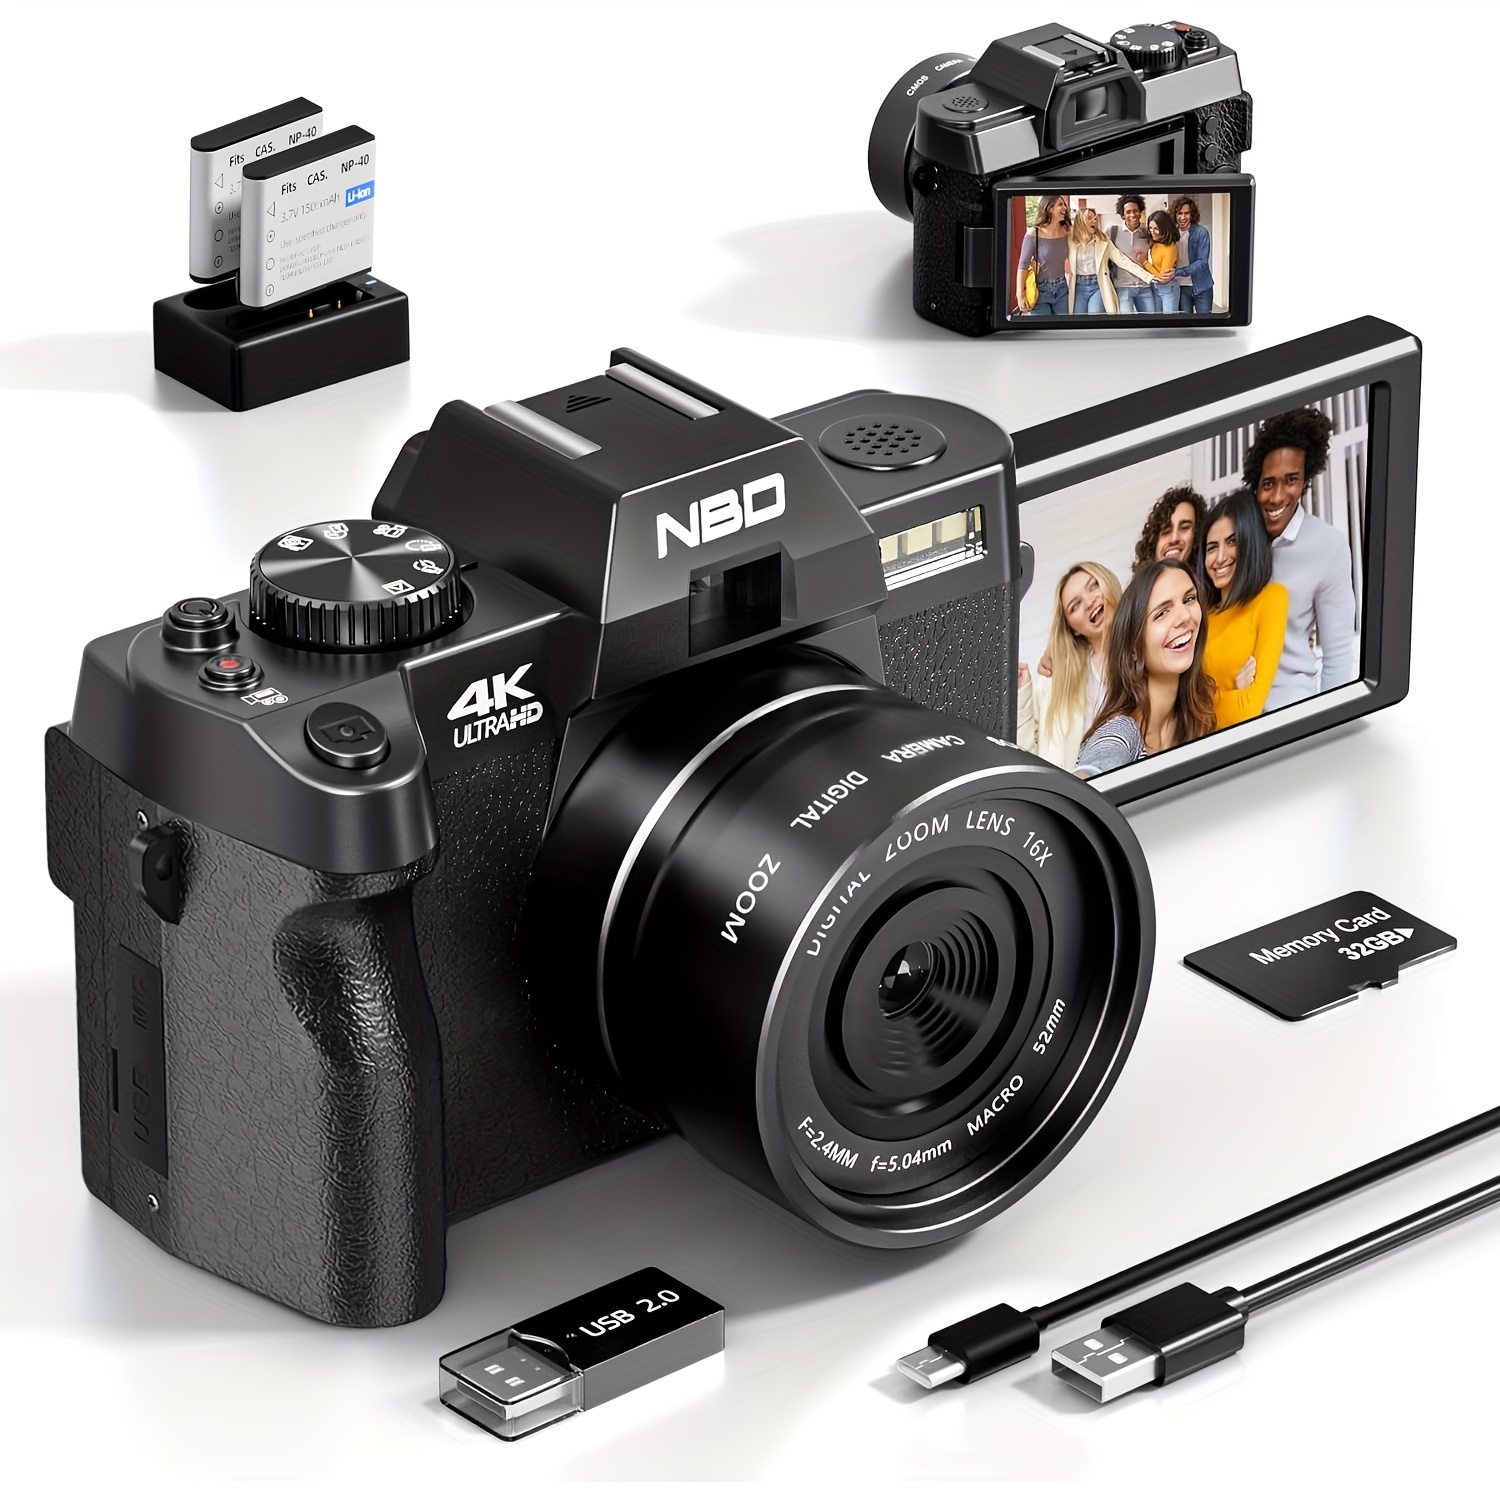 

Nbd Digital Camera 48mp/60fps Video Camera For Vlogging, Wifi & App Control Vlogging Camera, Small Camera With 32gb Tf Card, Black